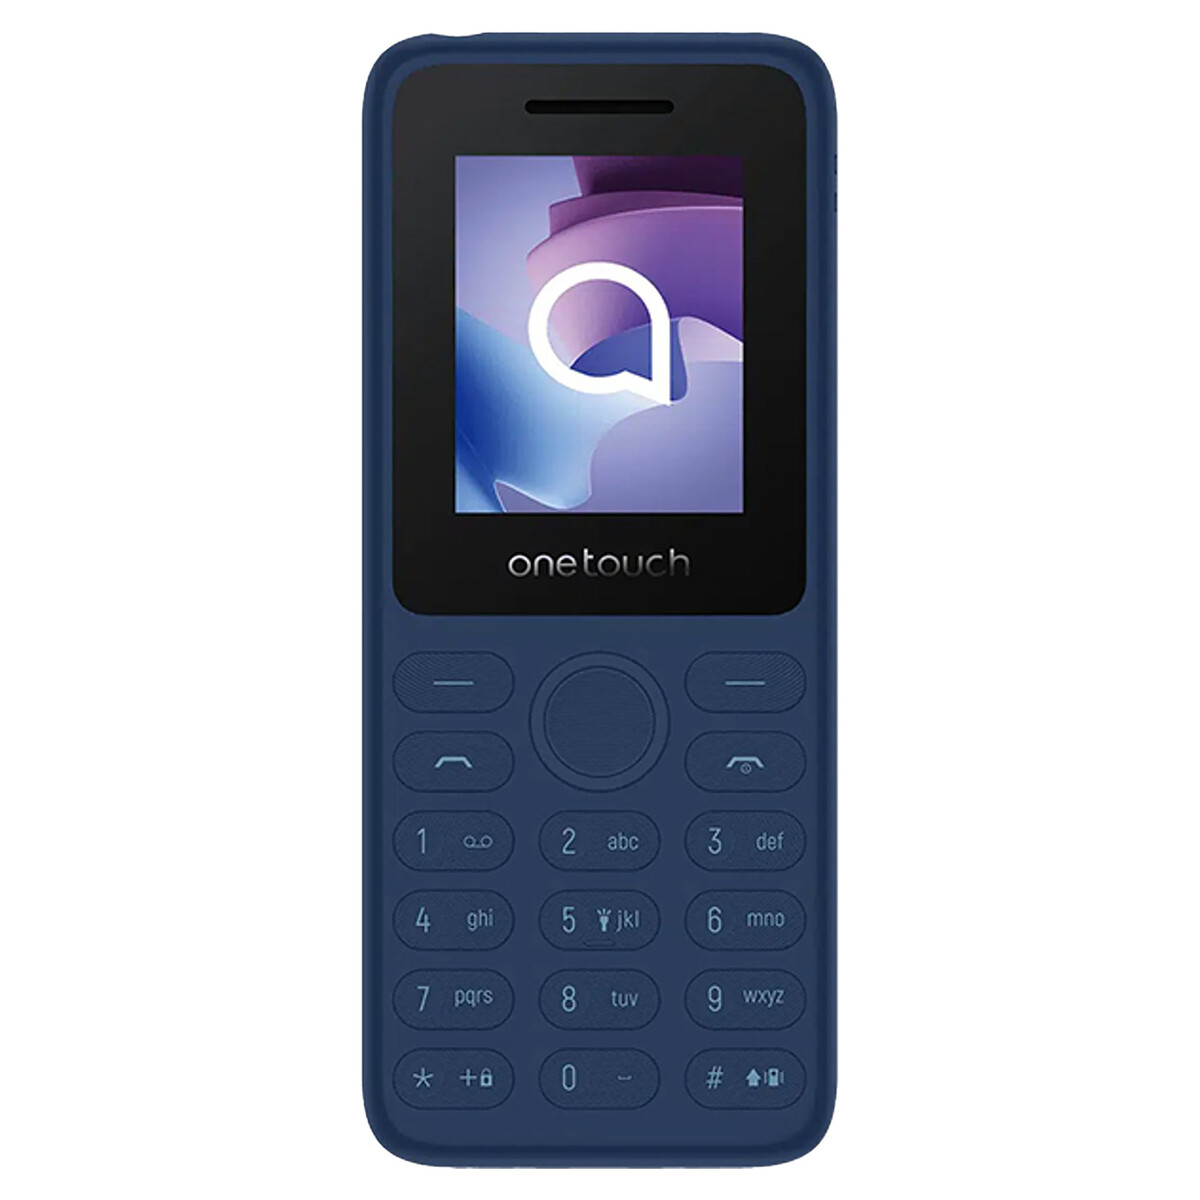 TCL 4G Mobile Phone 4041-Haze Blue